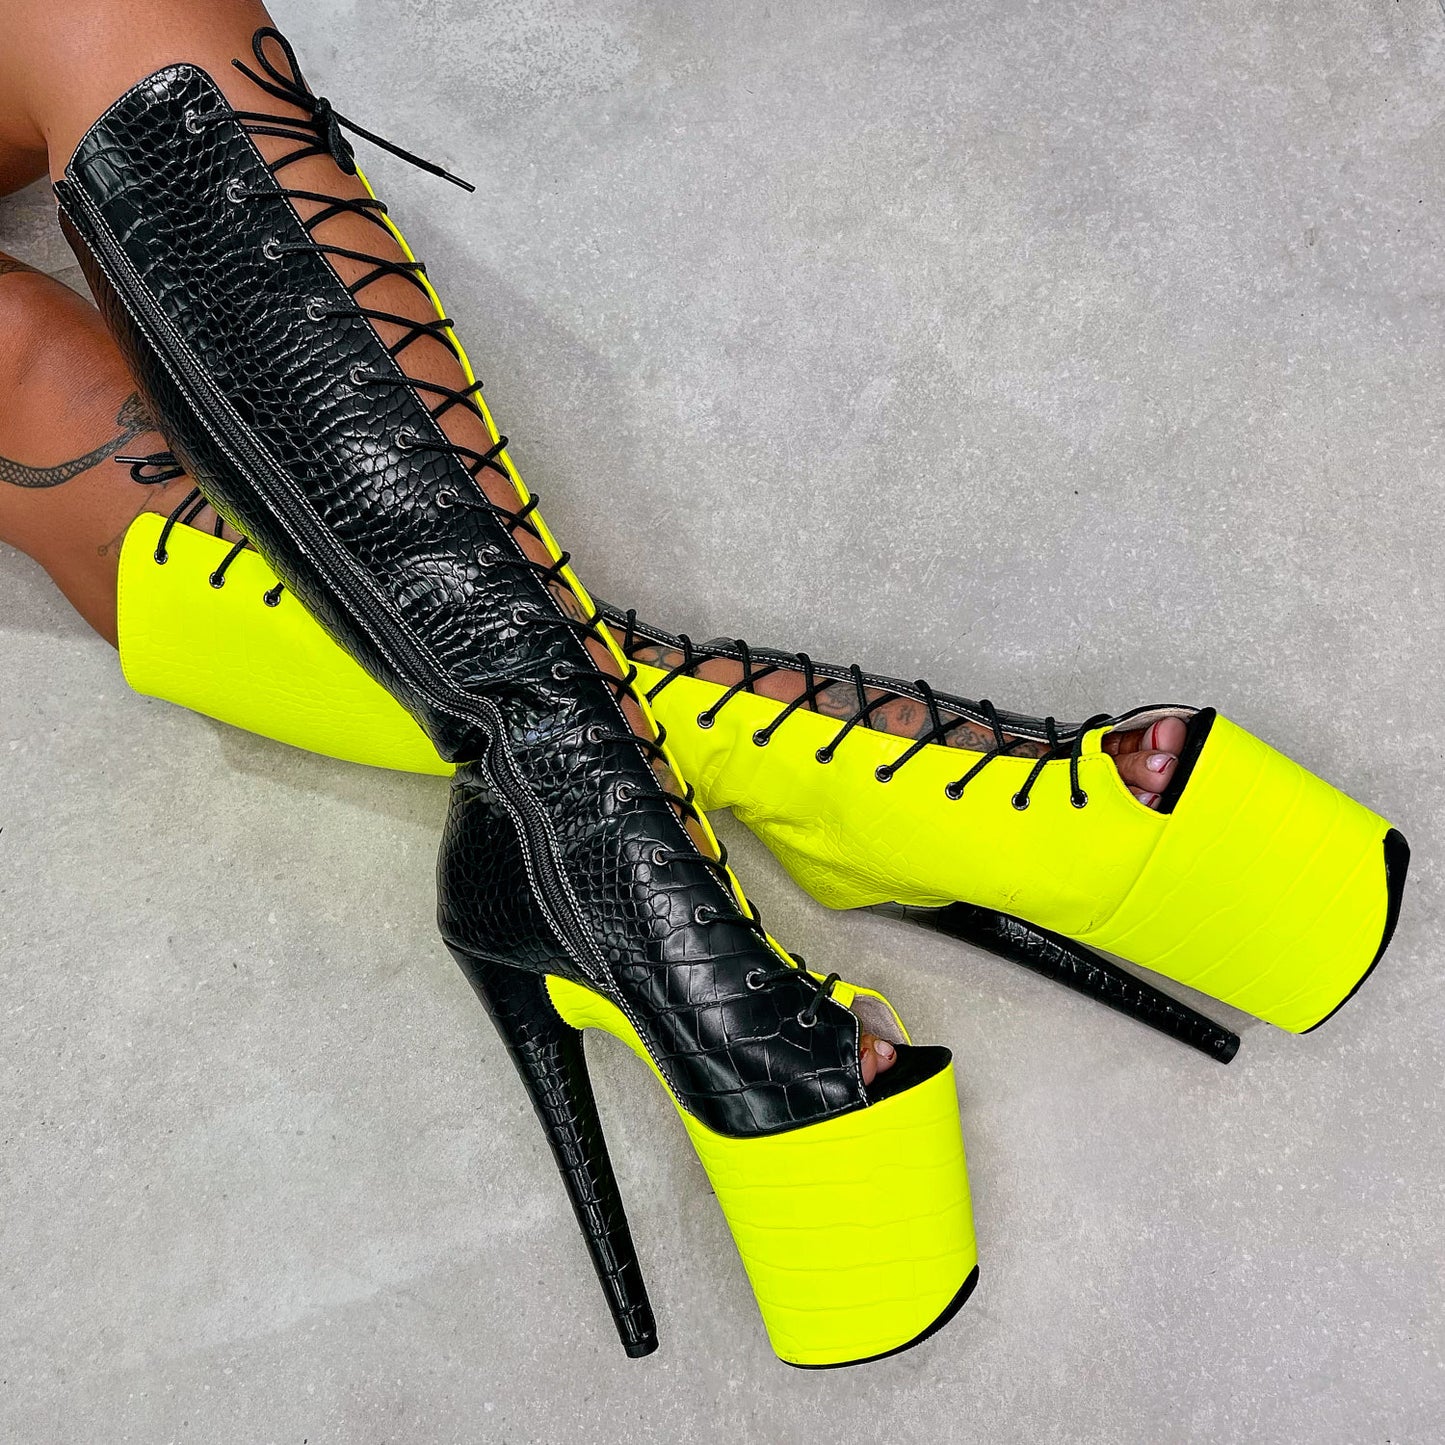 SNAPPED Black/Neon - Knee Boot Open Toe - 8INCH, stripper shoe, stripper heel, pole heel, not a pleaser, platform, dancer, pole dance, floor work